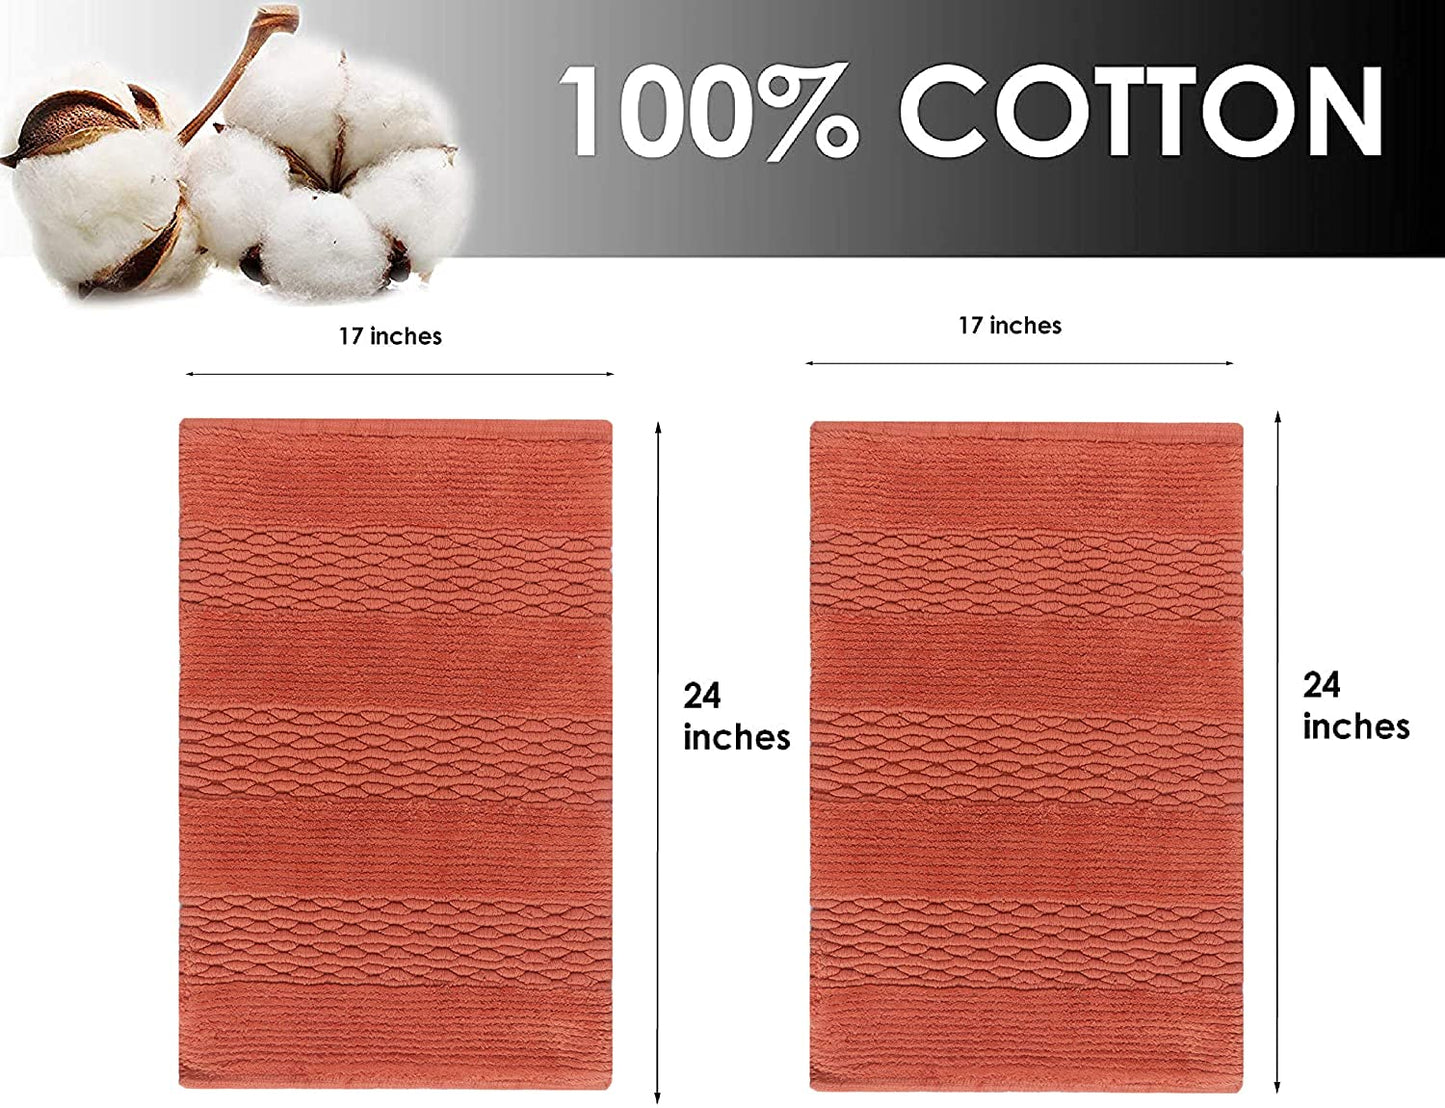 Cotton bath rugs water absorbent stripe design bathmat set of 2 - TreeWool Bathrugs#color_rusty